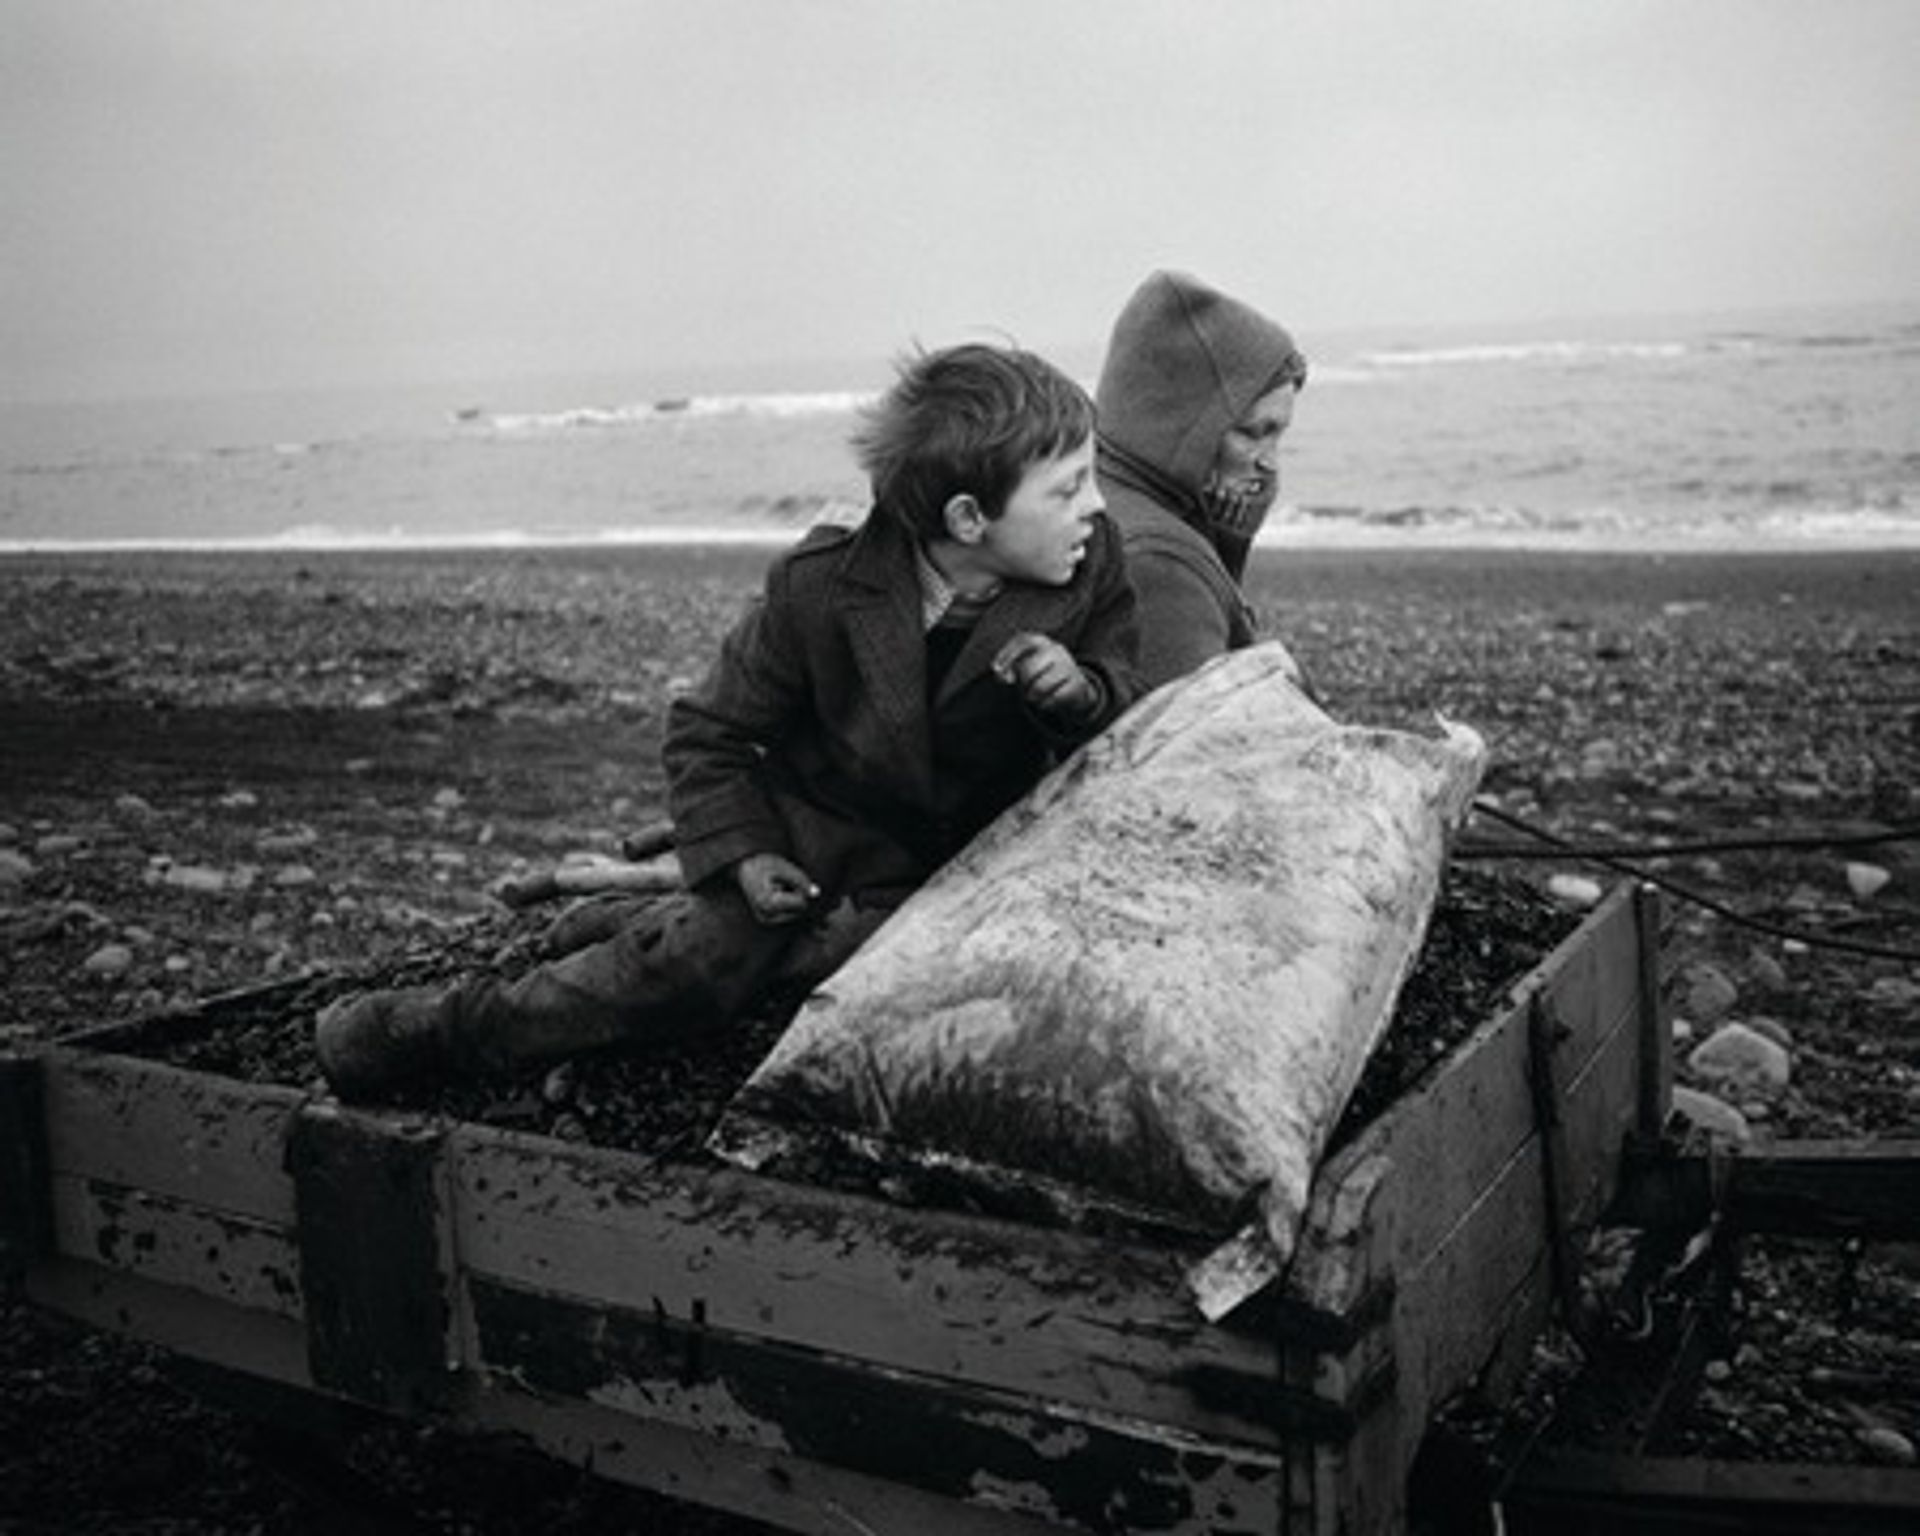 Chris Killip, “Rocker” and Rosie Going Home, Seacoal Beach, Lynemouth, Northumberland;(1983), Gelatin silver print, Gift of the Robert Mapplethorpe Foundation, Inc. (Photo: © Chris Killip)